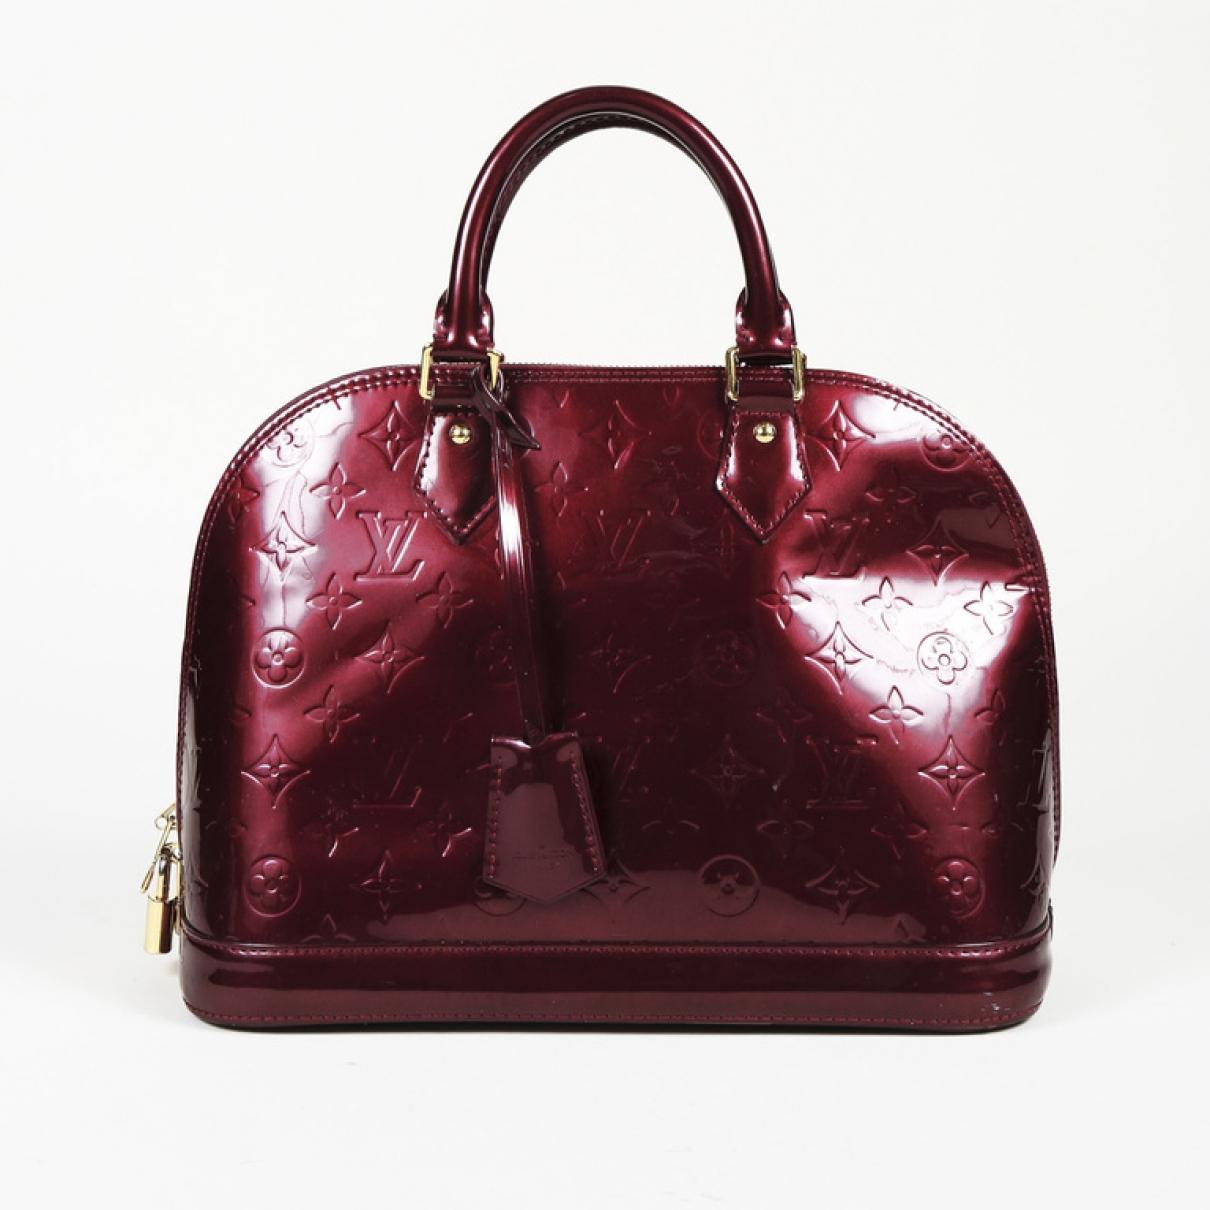 Lyst - Louis Vuitton Pre-owned Alma Purple Patent Leather Handbags in Purple